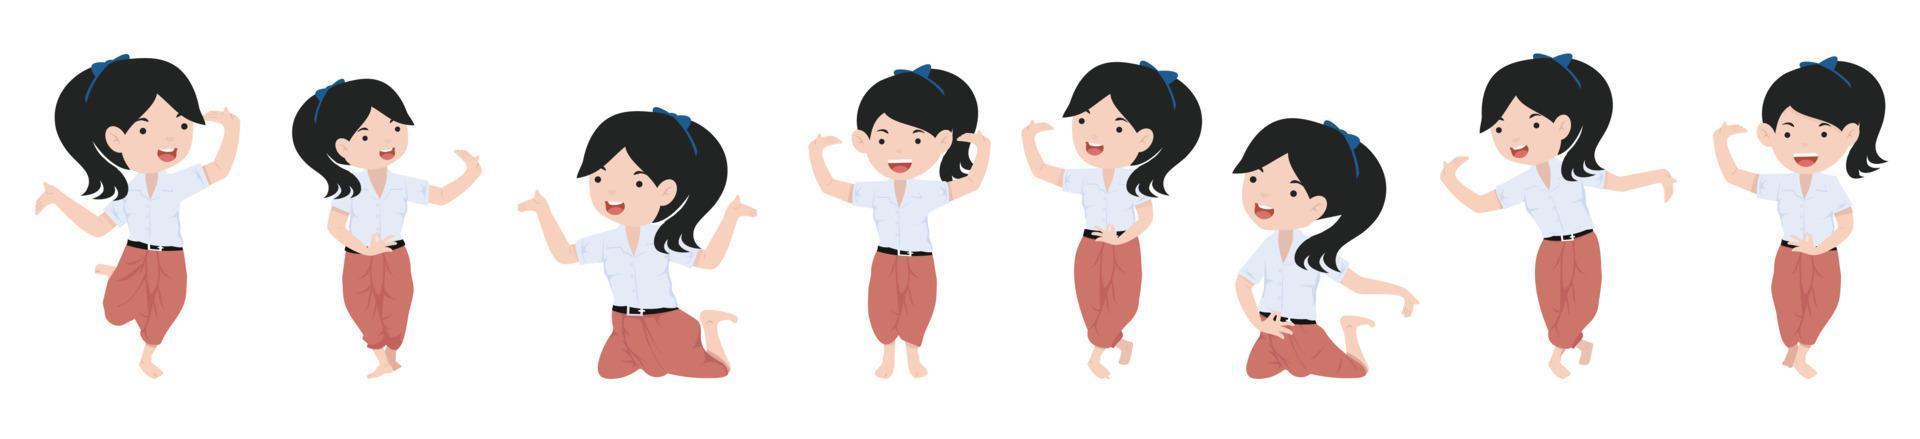 Cartoon character girl student  traditional Thai dancer set vector